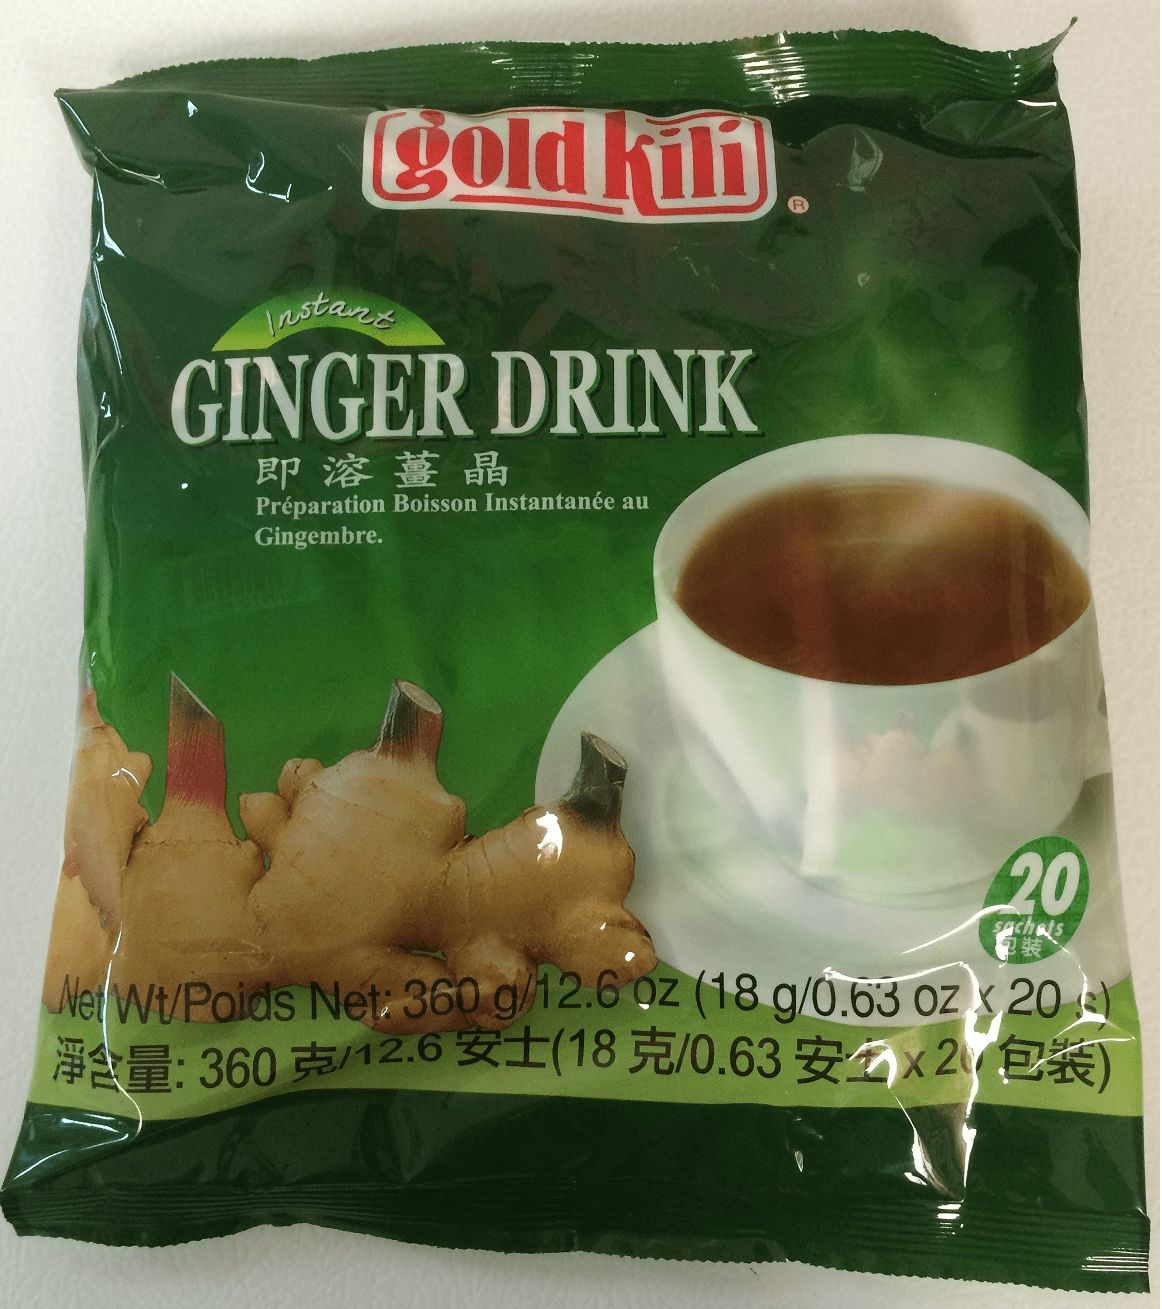 Instant Ginger Drink by Goldkili (20 packs)